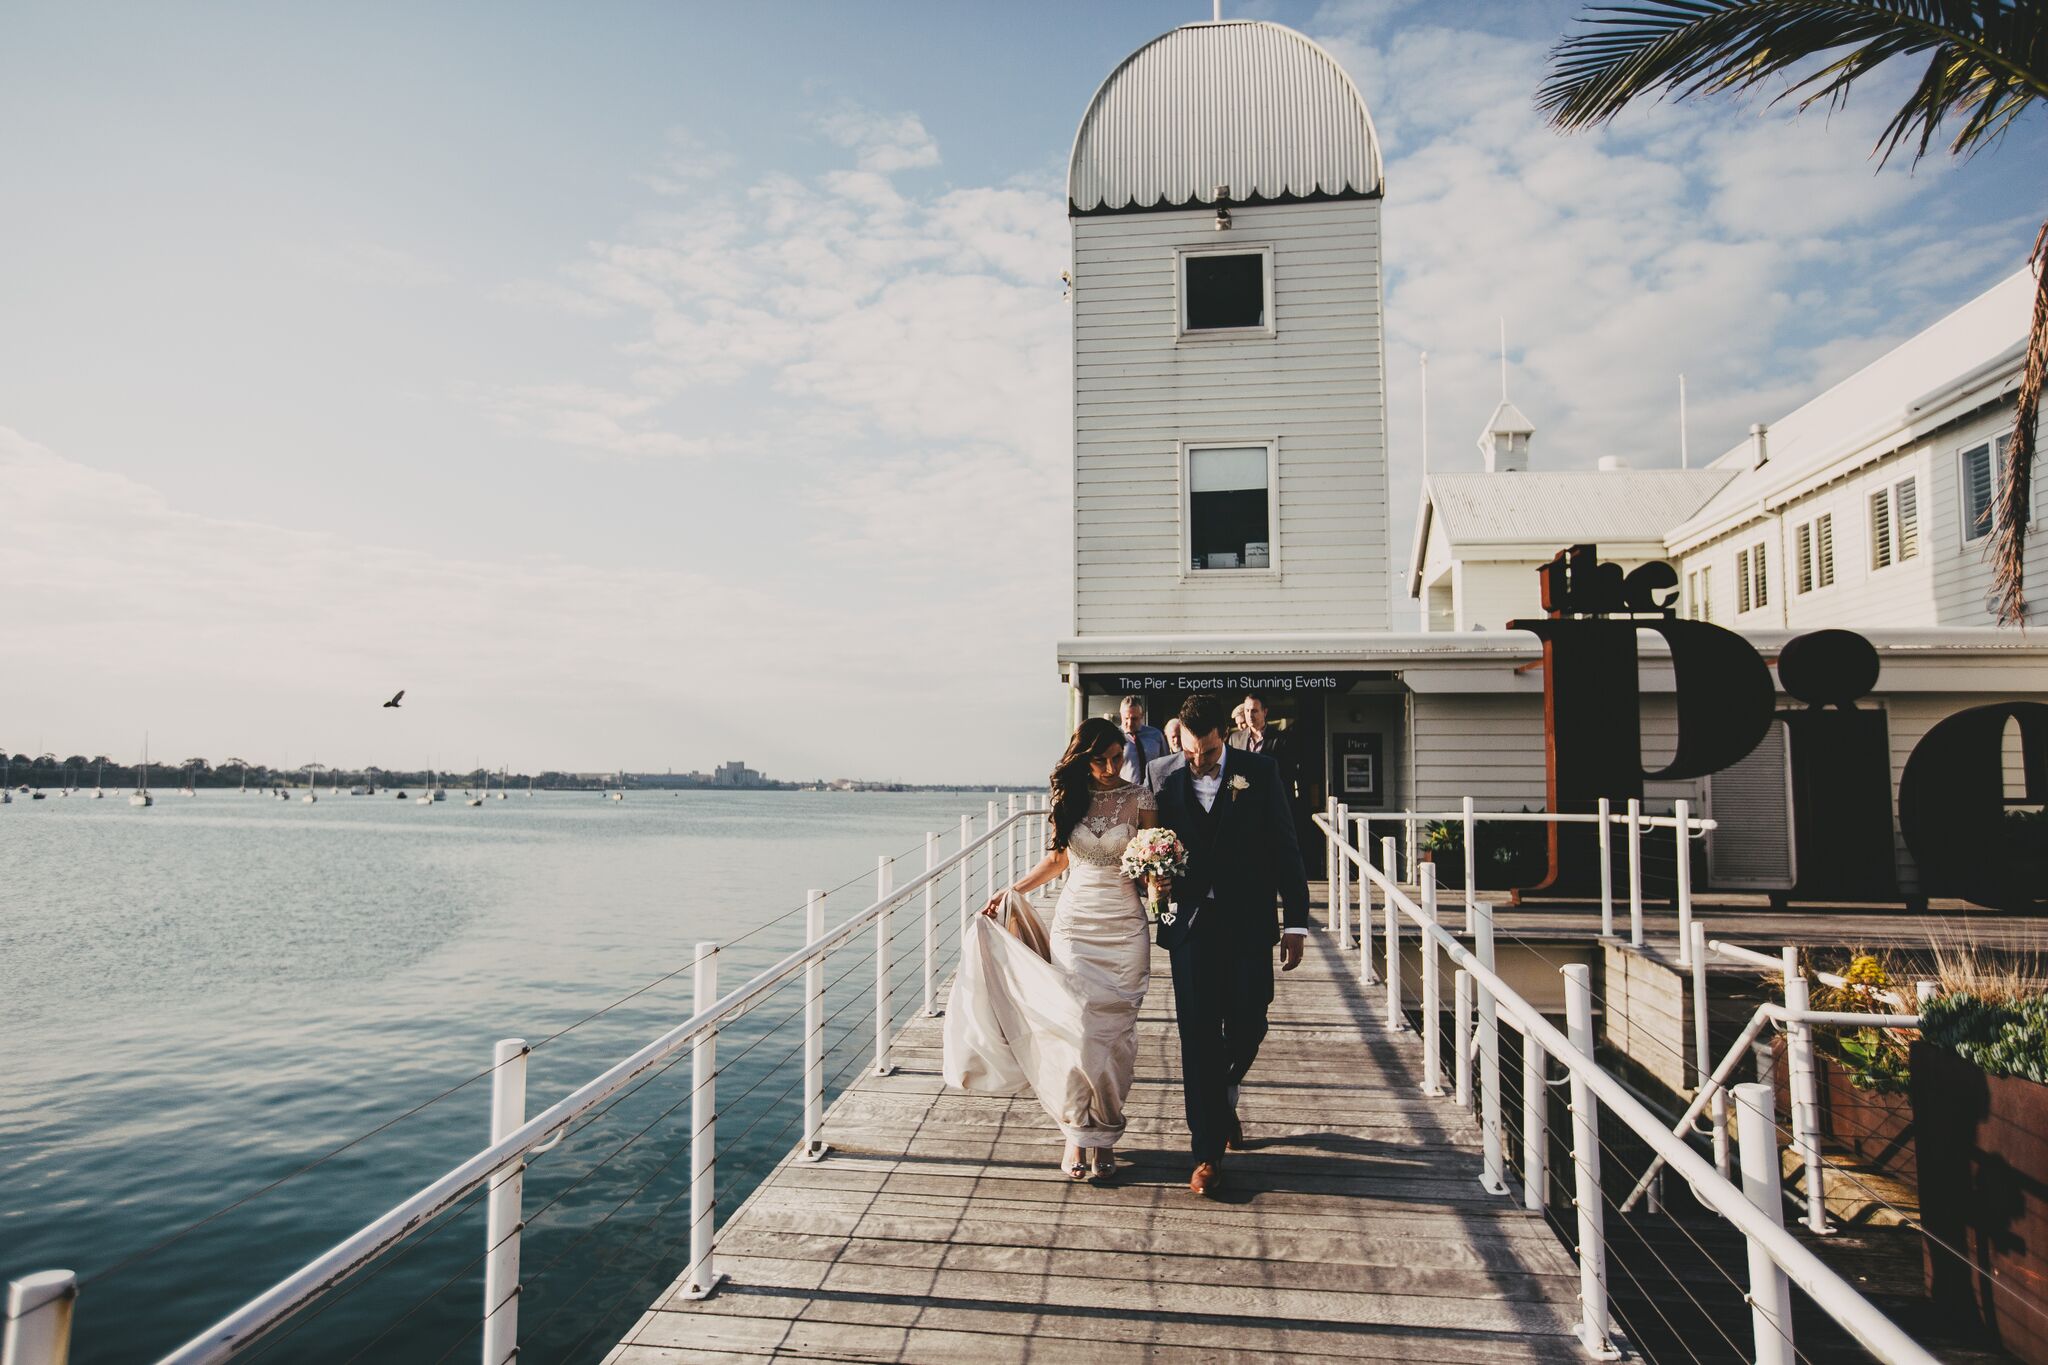 Wedding Venue & Big Room Hire Geelong | Top Affordable Waterfront ...